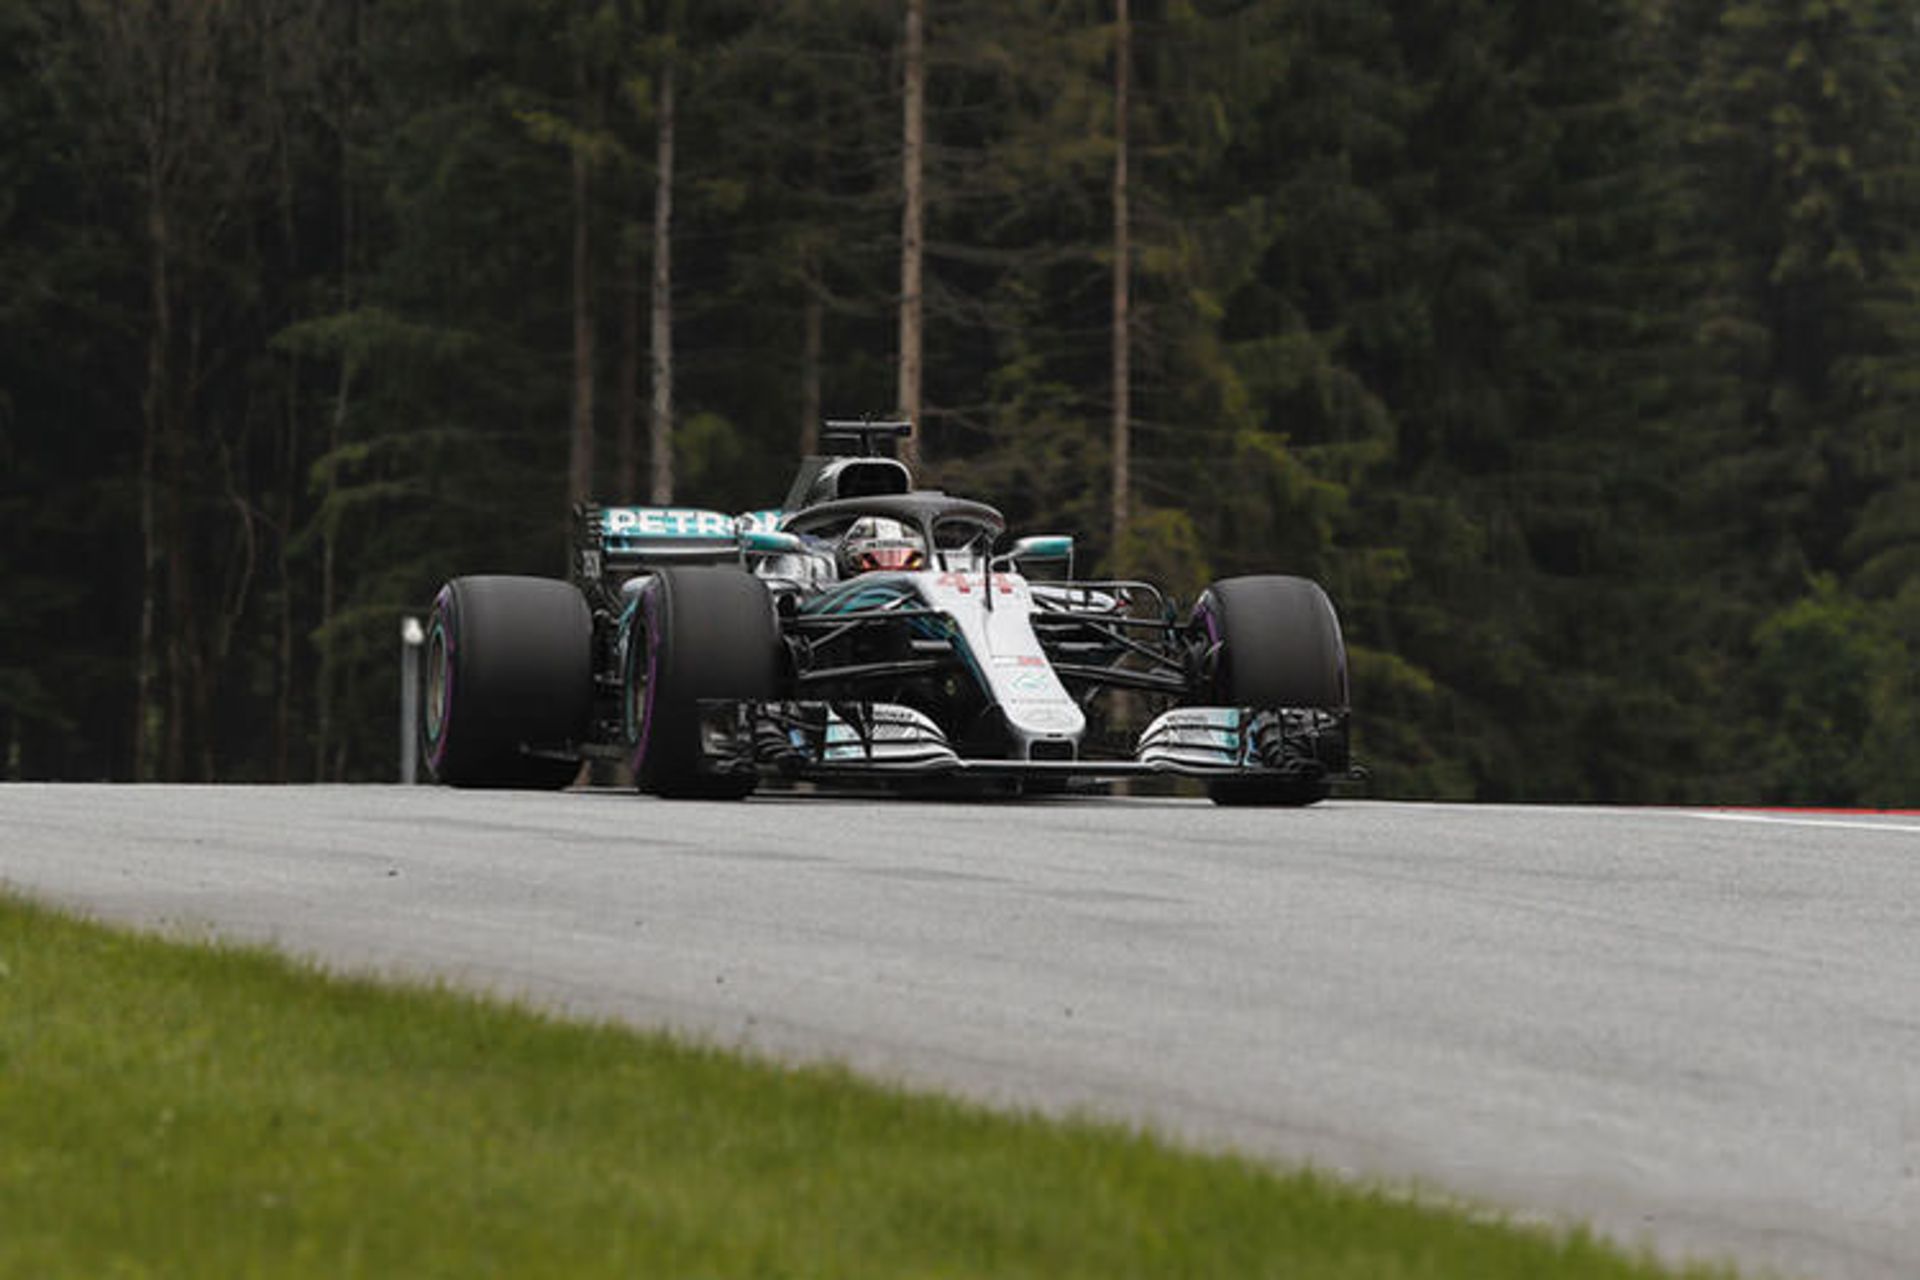 Austrian Grand Prix Formula 1 / گرندپری فرمول یک اتریش 2018